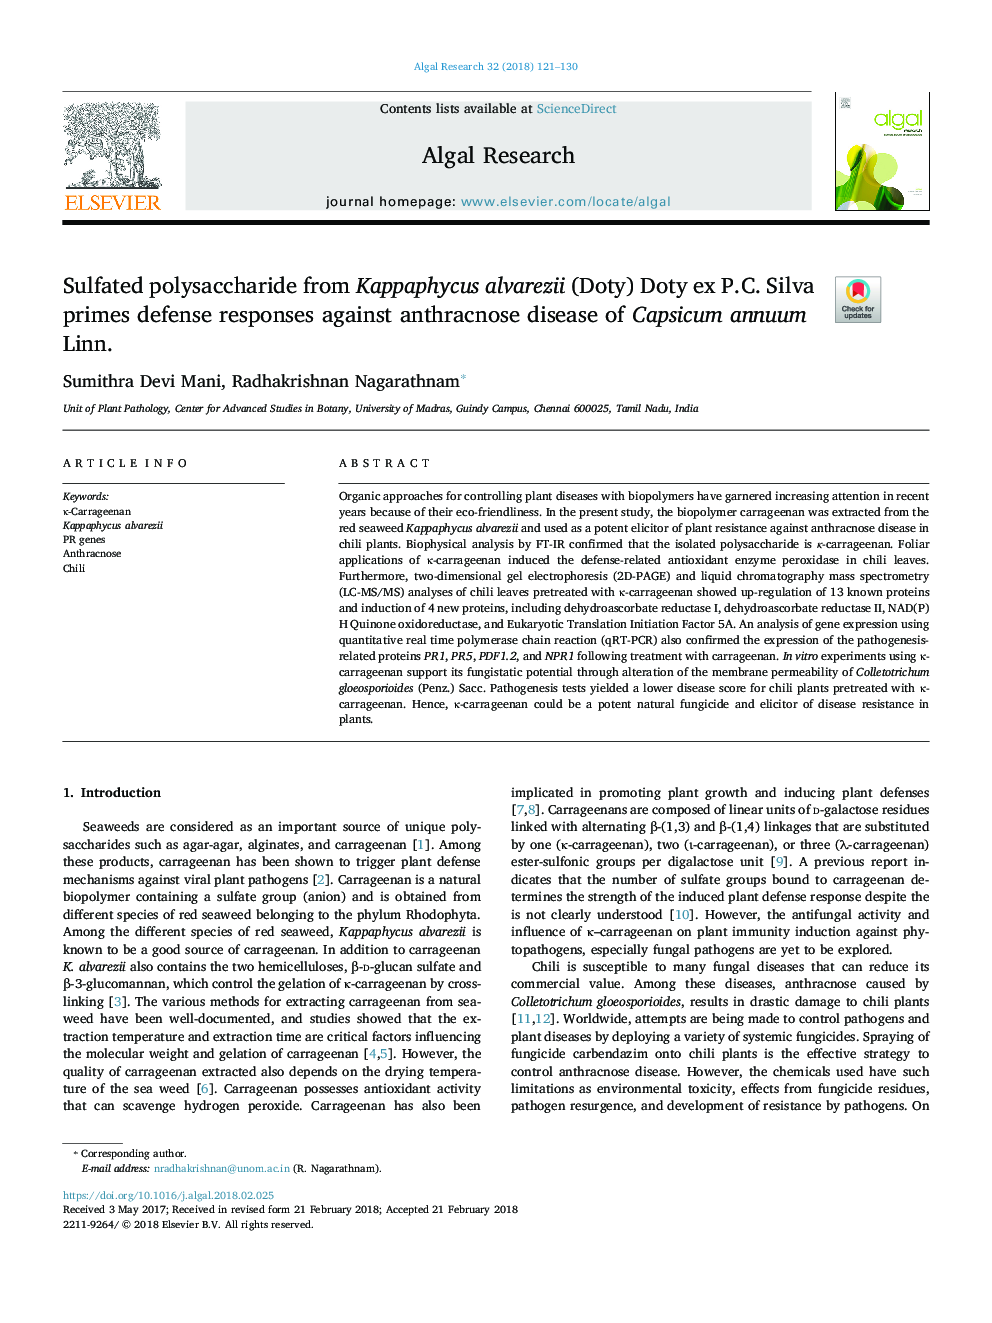 Sulfated polysaccharide from Kappaphycus alvarezii (Doty) Doty ex P.C. Silva primes defense responses against anthracnose disease of Capsicum annuum Linn.